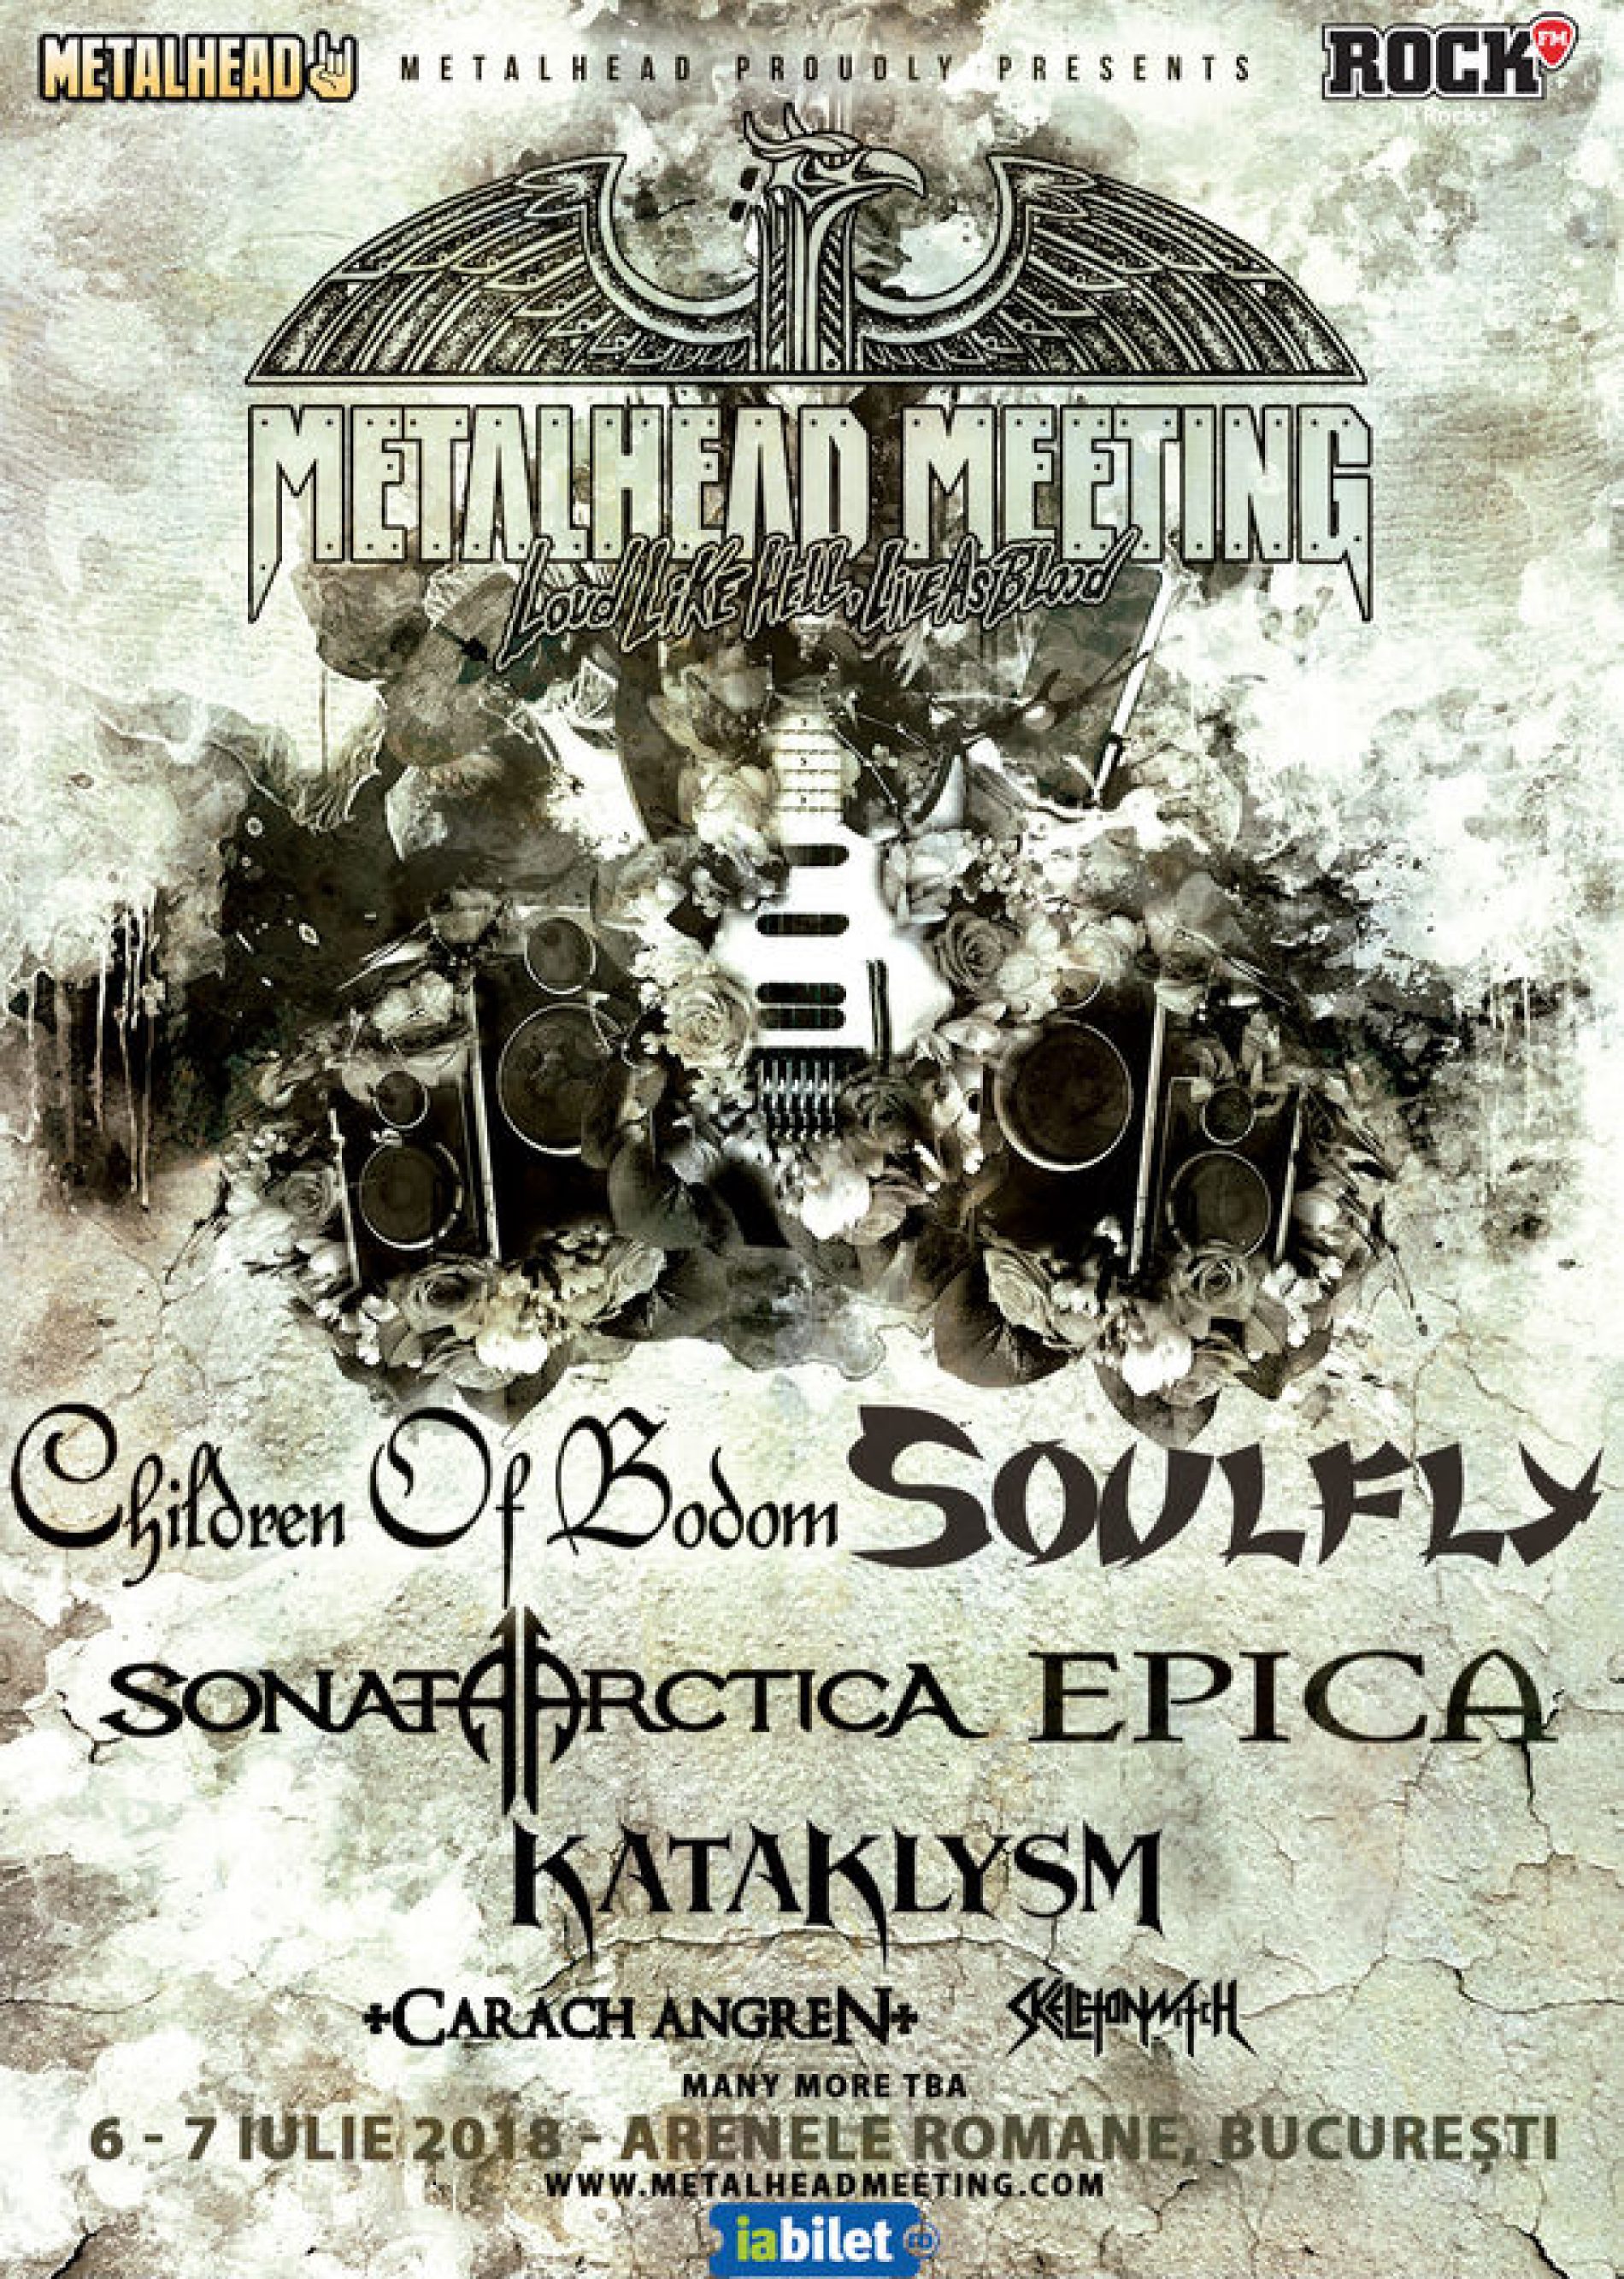 SOULFLY confirmați la Metalhead Meeting Festival 2018